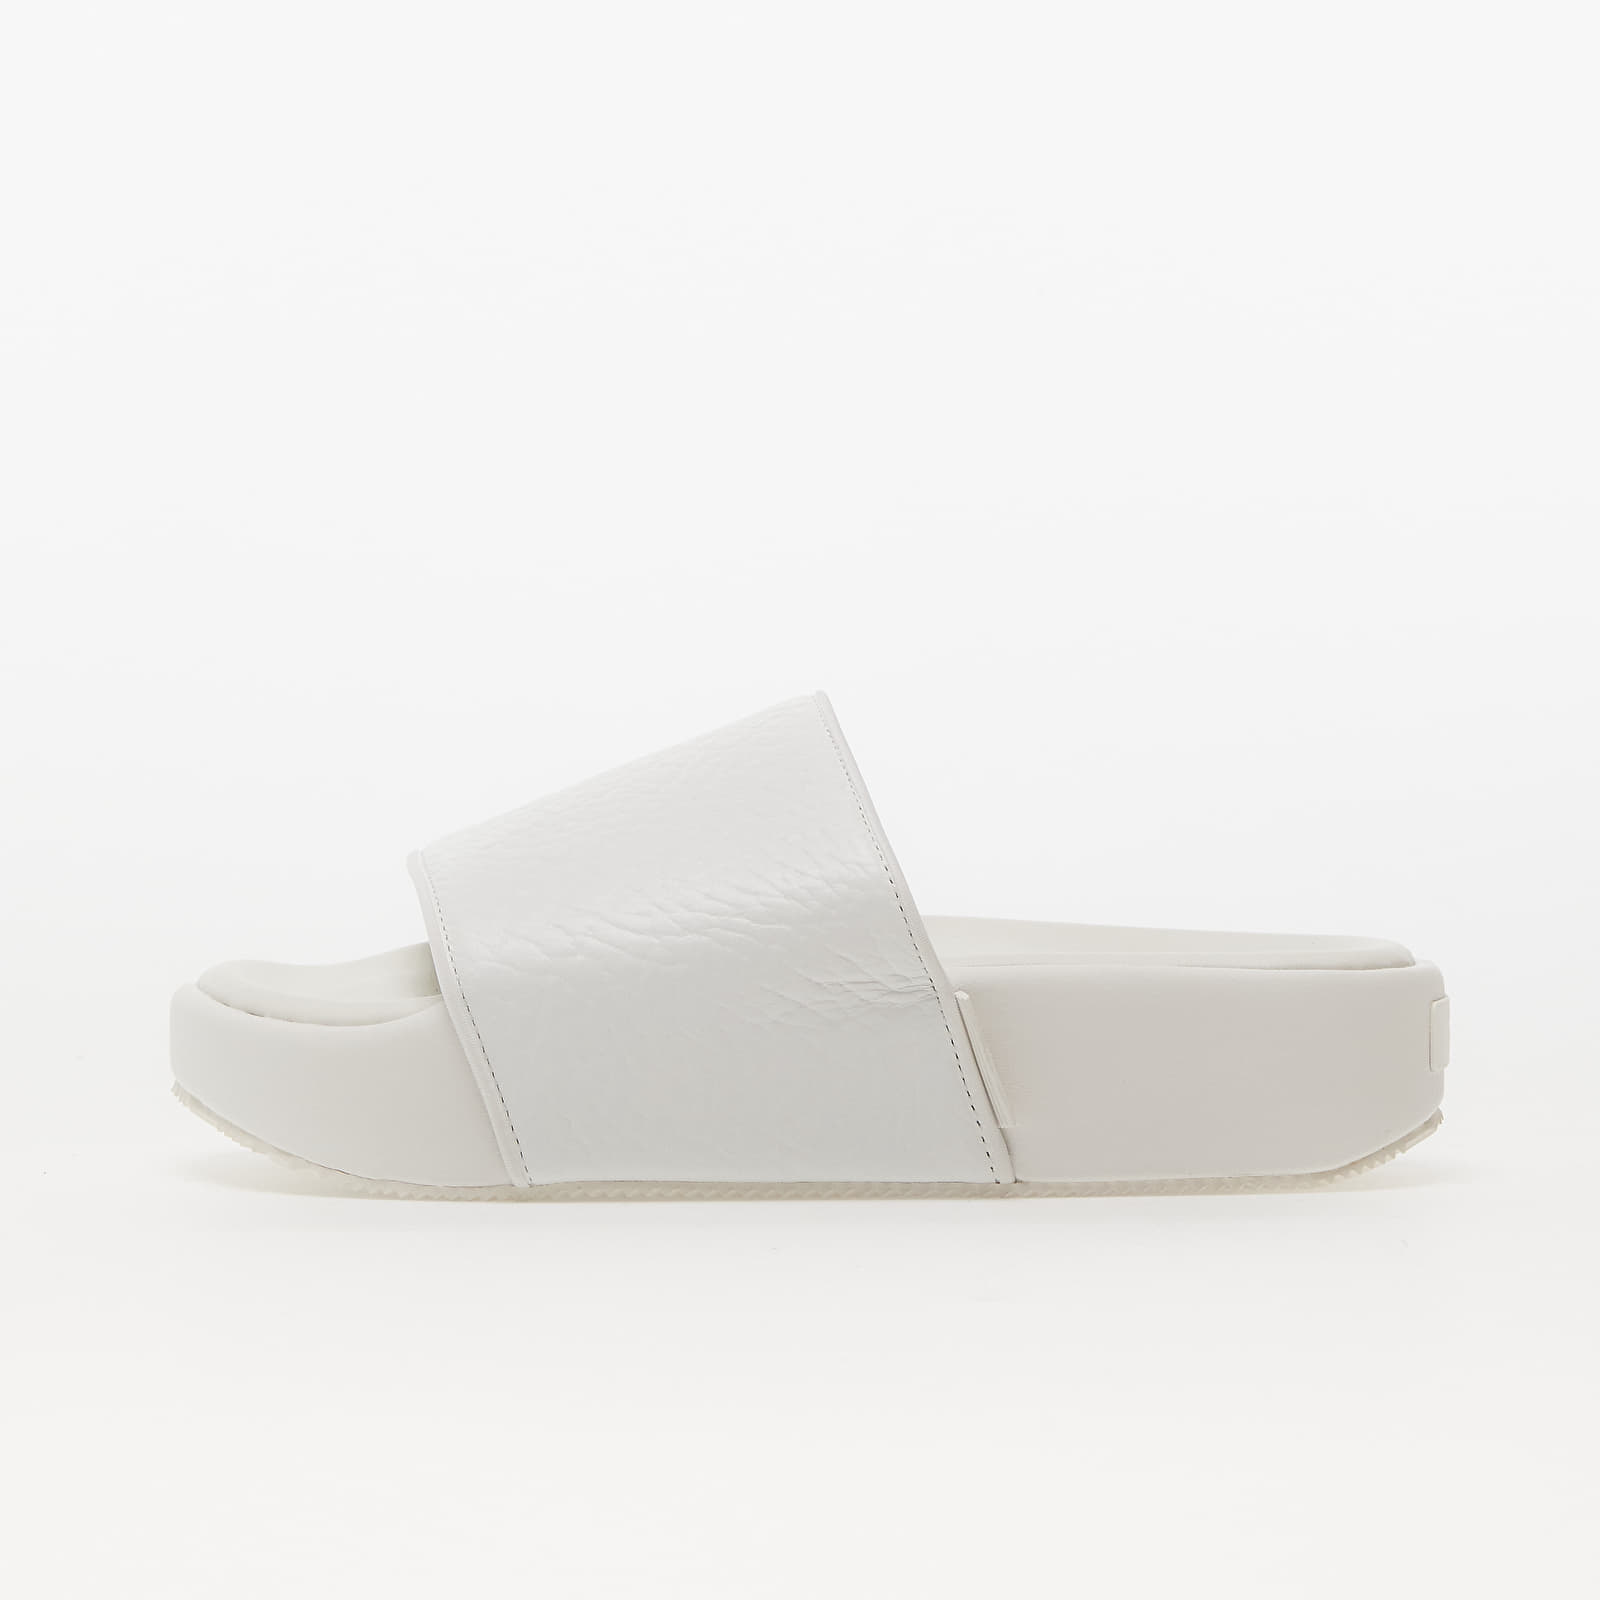 Men's shoes Y-3 Slide Core White/ Core White/ Core White